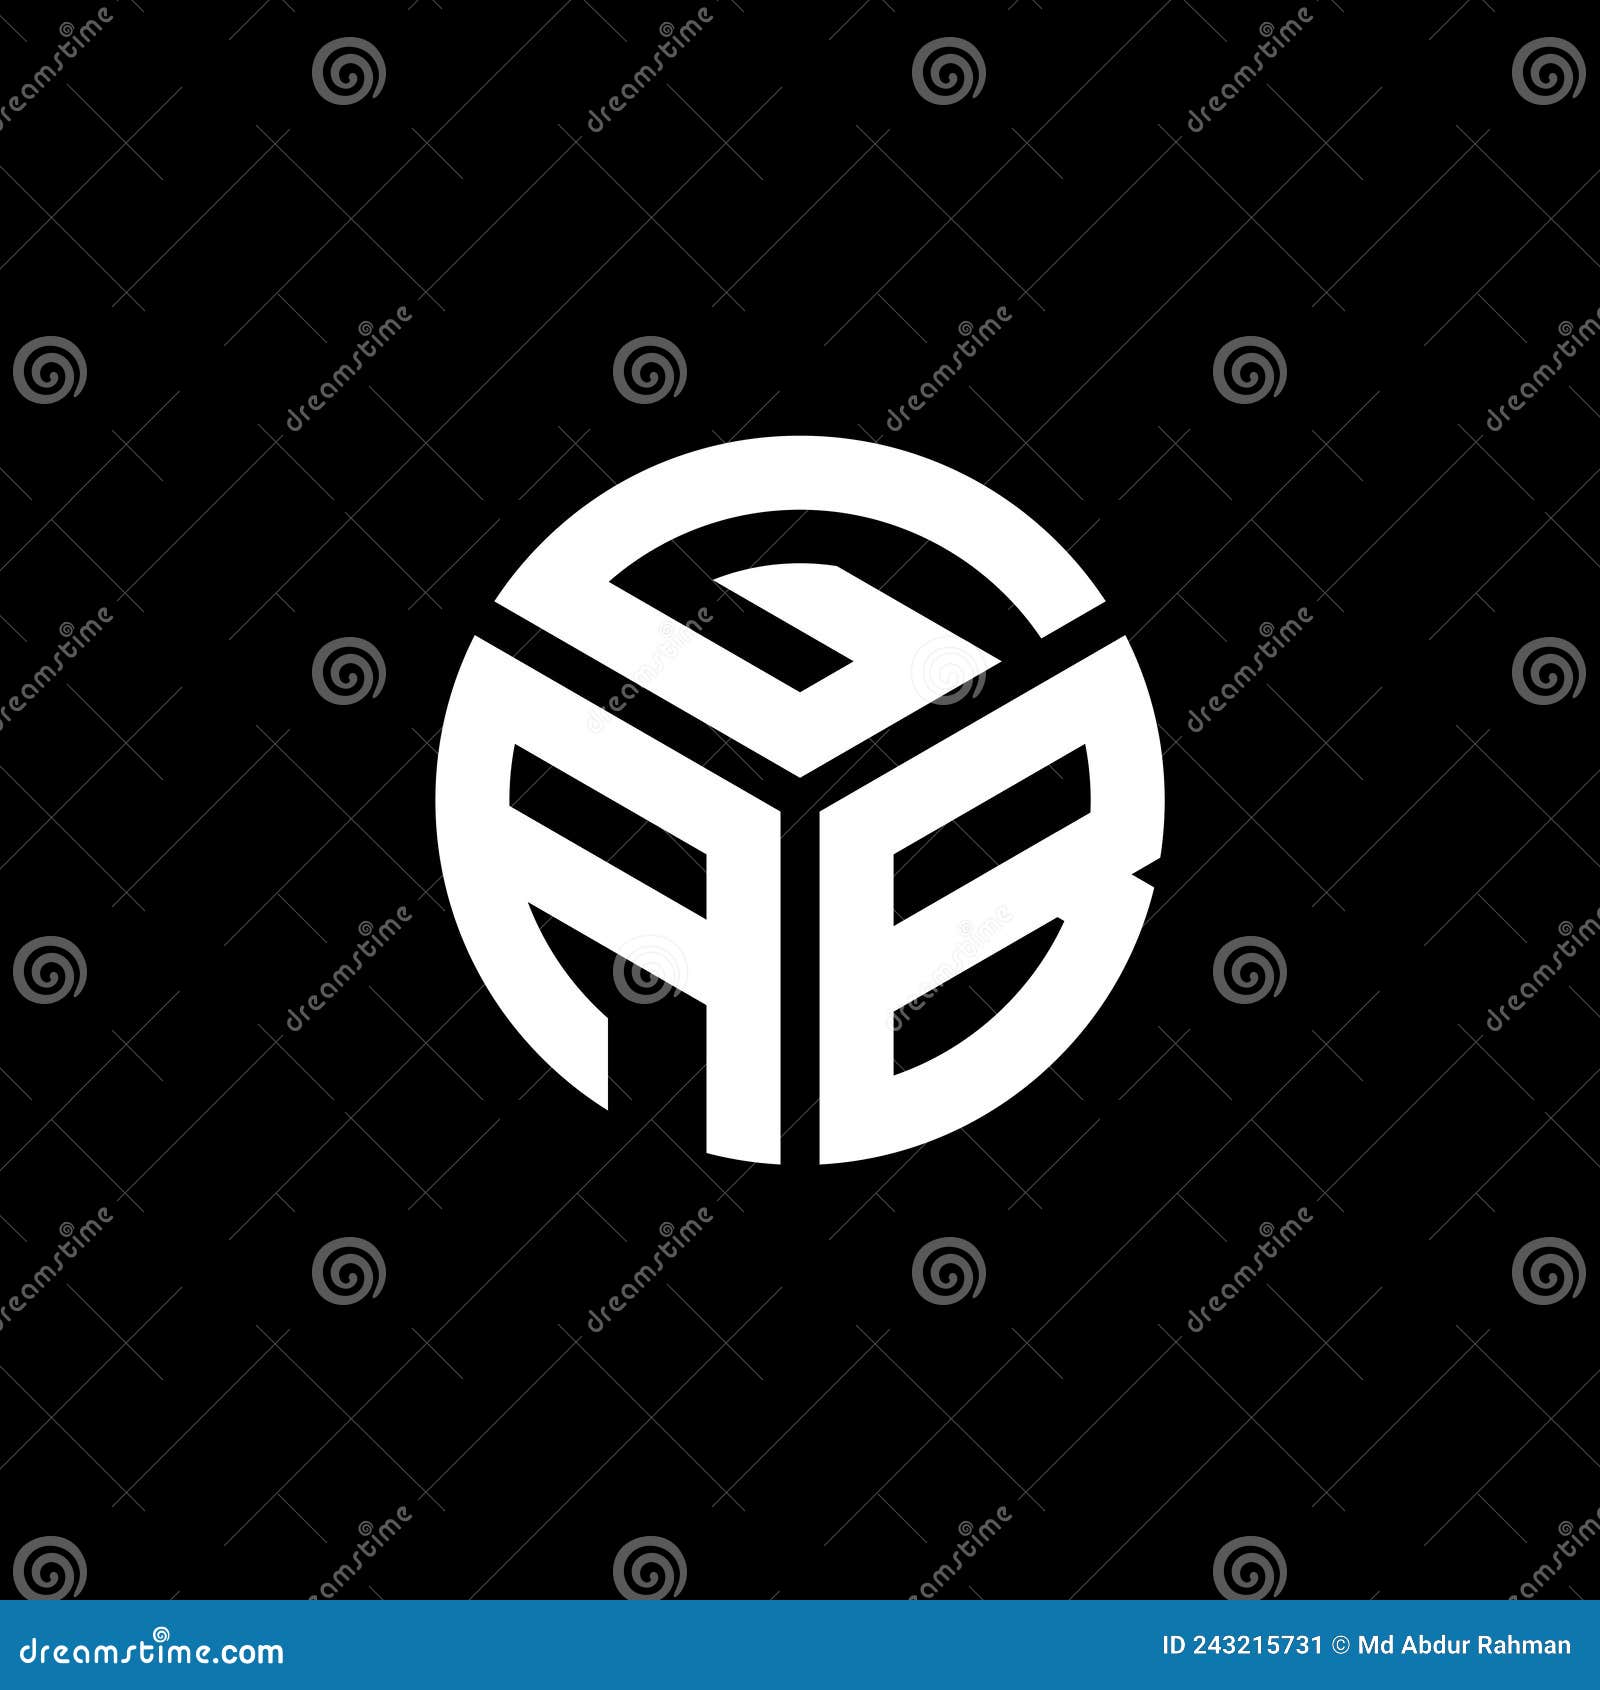 gab letter logo  on black background. gab creative initials letter logo concept. gab letter 